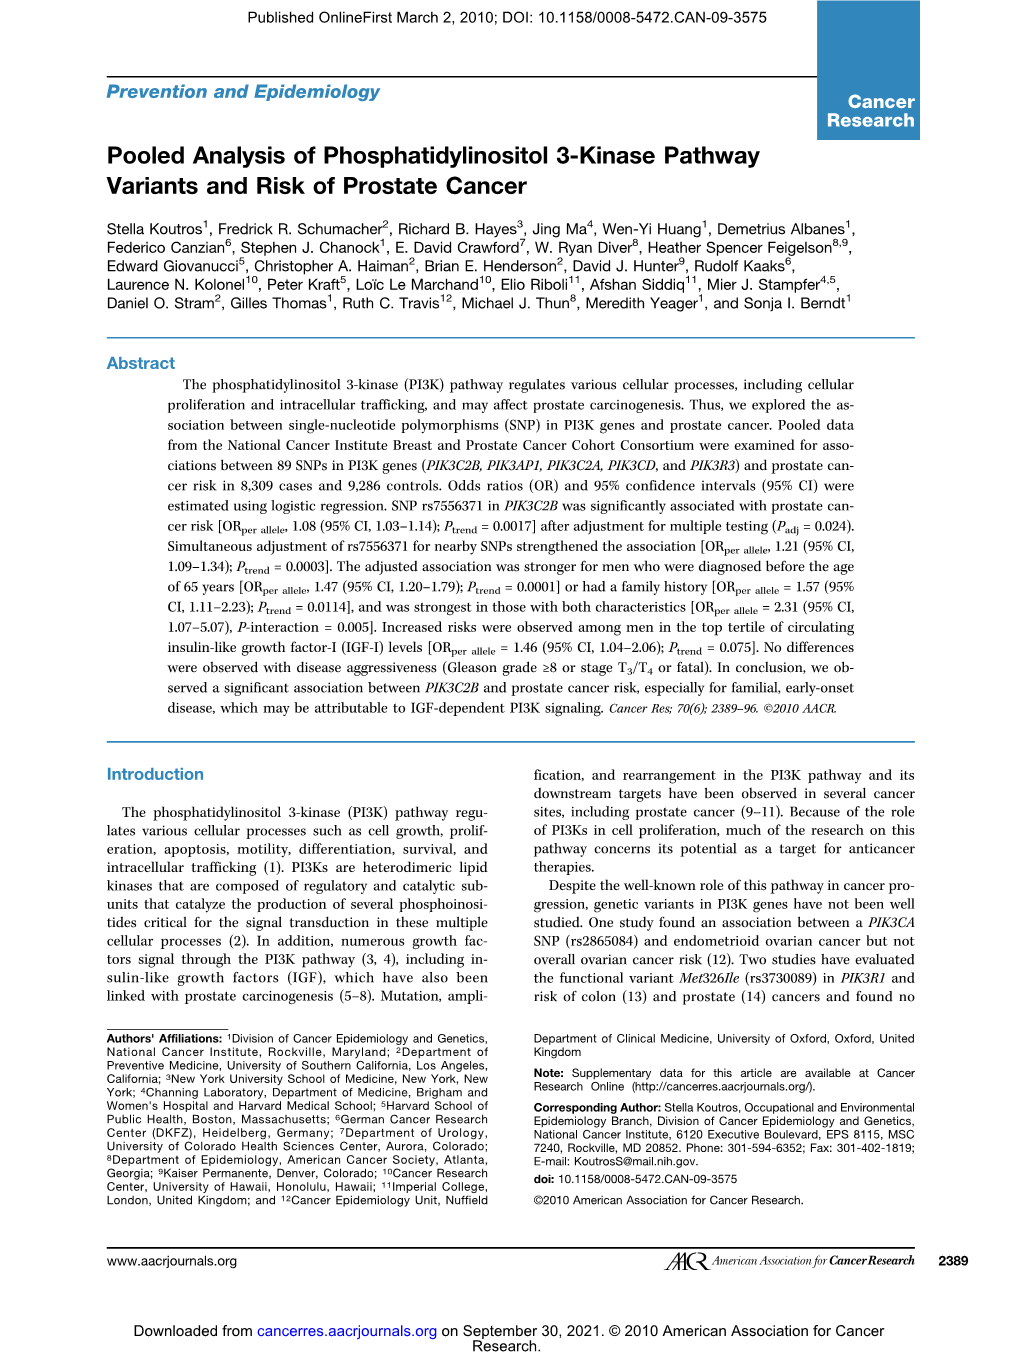 Pooled Analysis of Phosphatidylinositol 3-Kinase Pathway Variants and Risk of Prostate Cancer